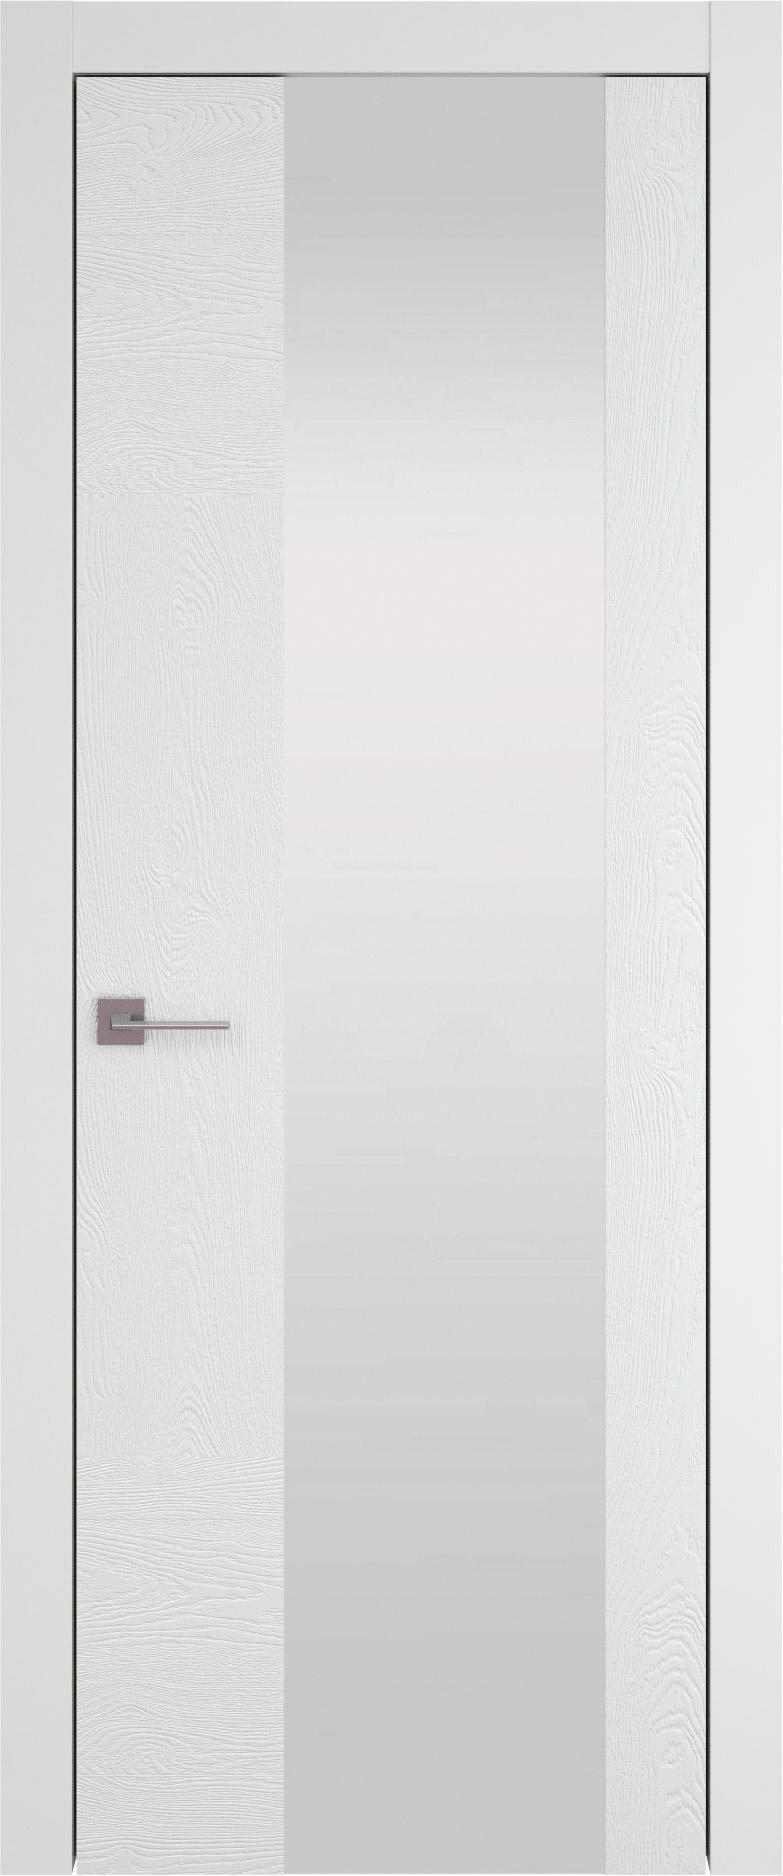 Tivoli Е-1 цвет - Белая эмаль по шпону (RAL 9003) Со стеклом (ДО)